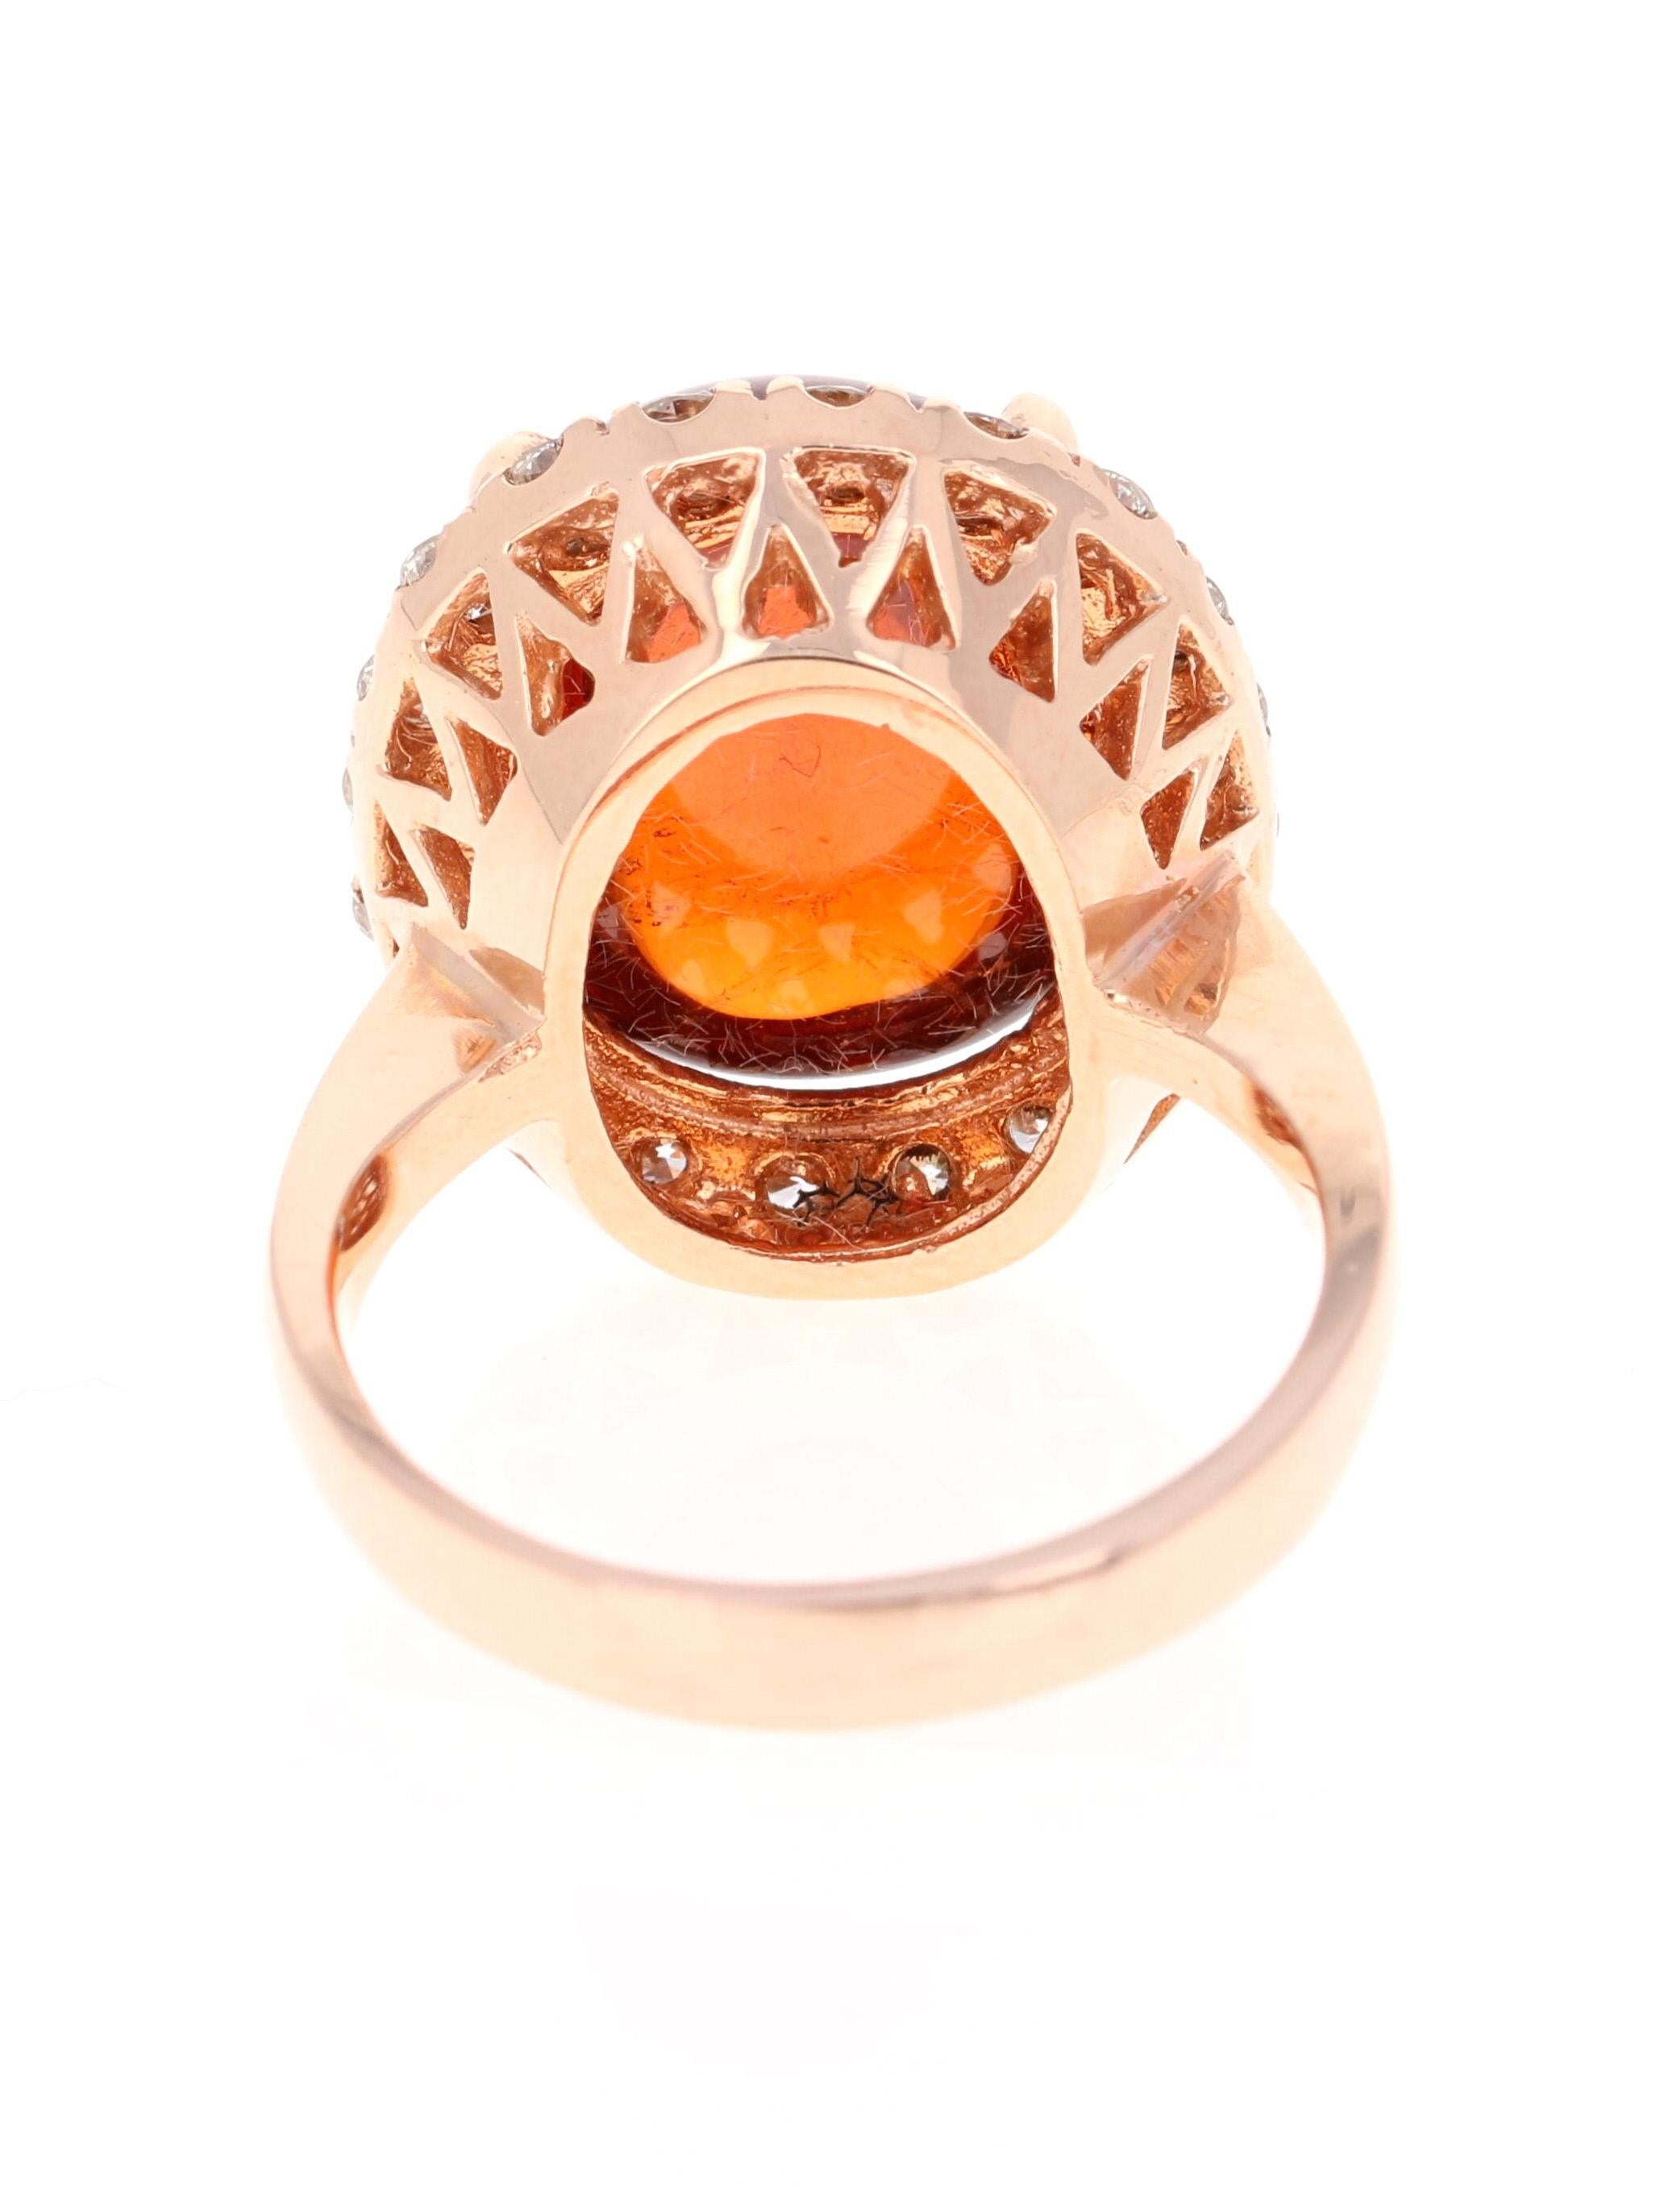 Oval Cut 15.14 Carat Spessartine Garnet Diamond Rose Gold Cocktail Ring For Sale